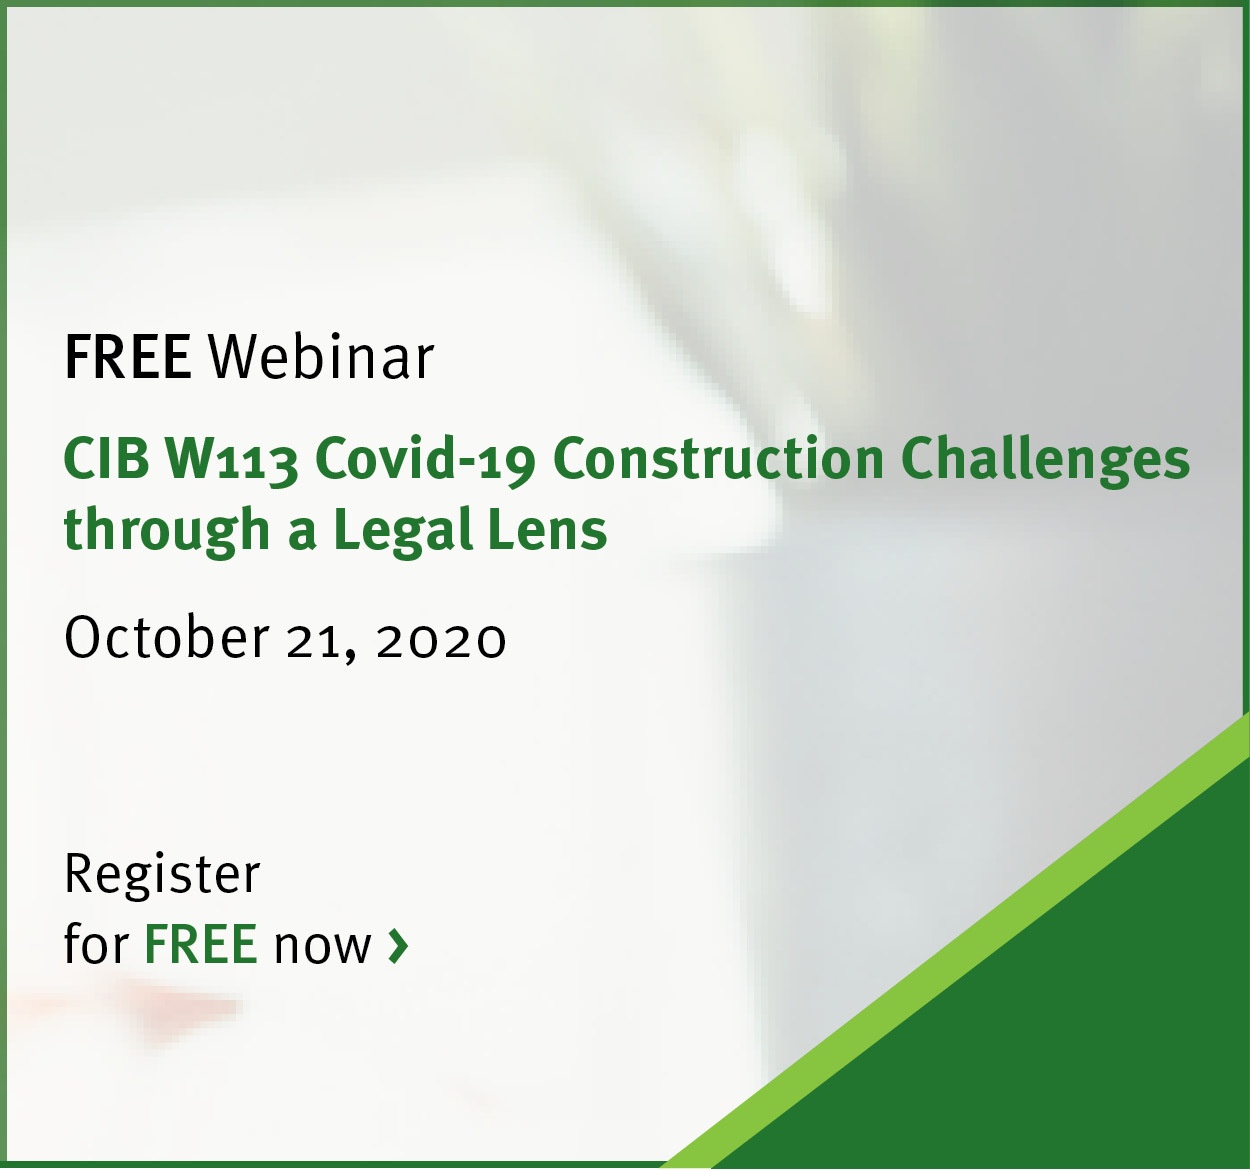 CIB W113 Covid-19 Construction Challenges through a Legal Lens